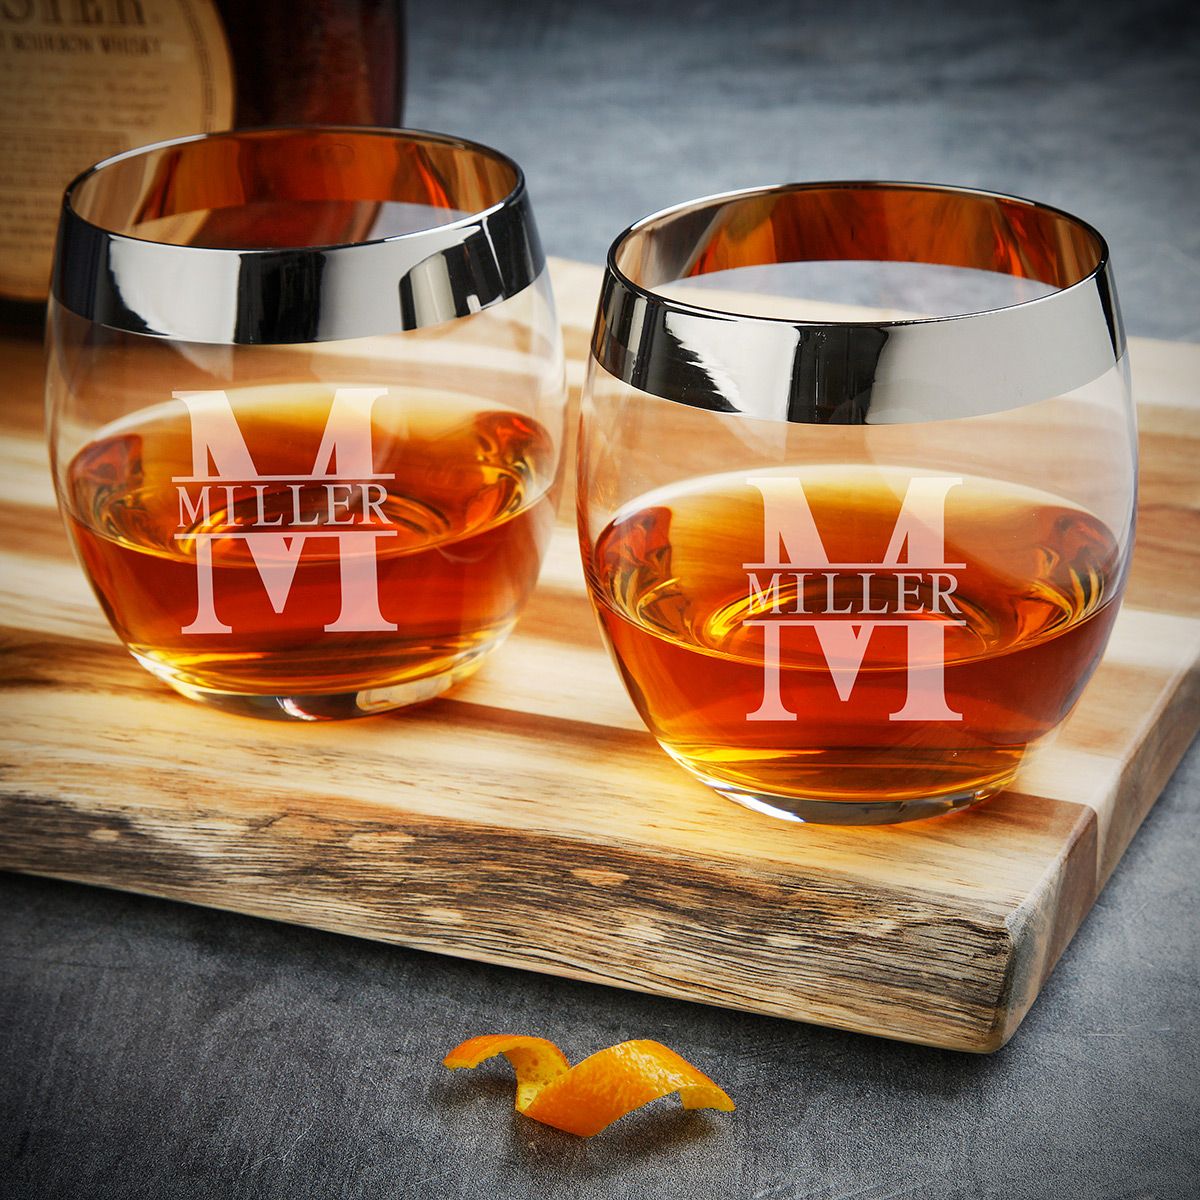 Davenport Engraved Crystal Whiskey Glass, Set of 2, with Chrome Rim